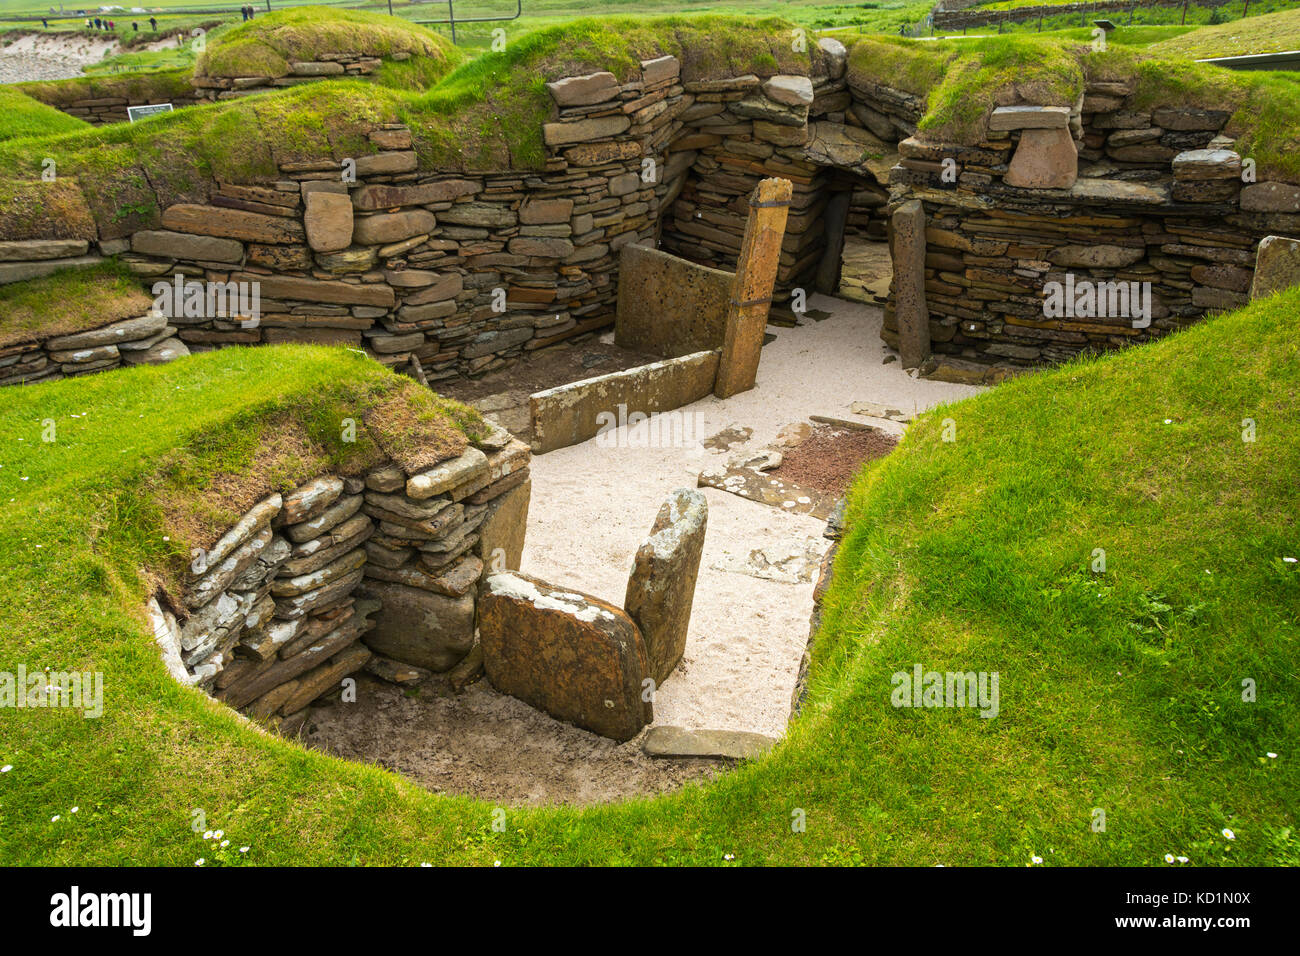 A dwelling at Skara Brae Neolithic Village.,Orkney Mainland, Scotland, UK. Stock Photo